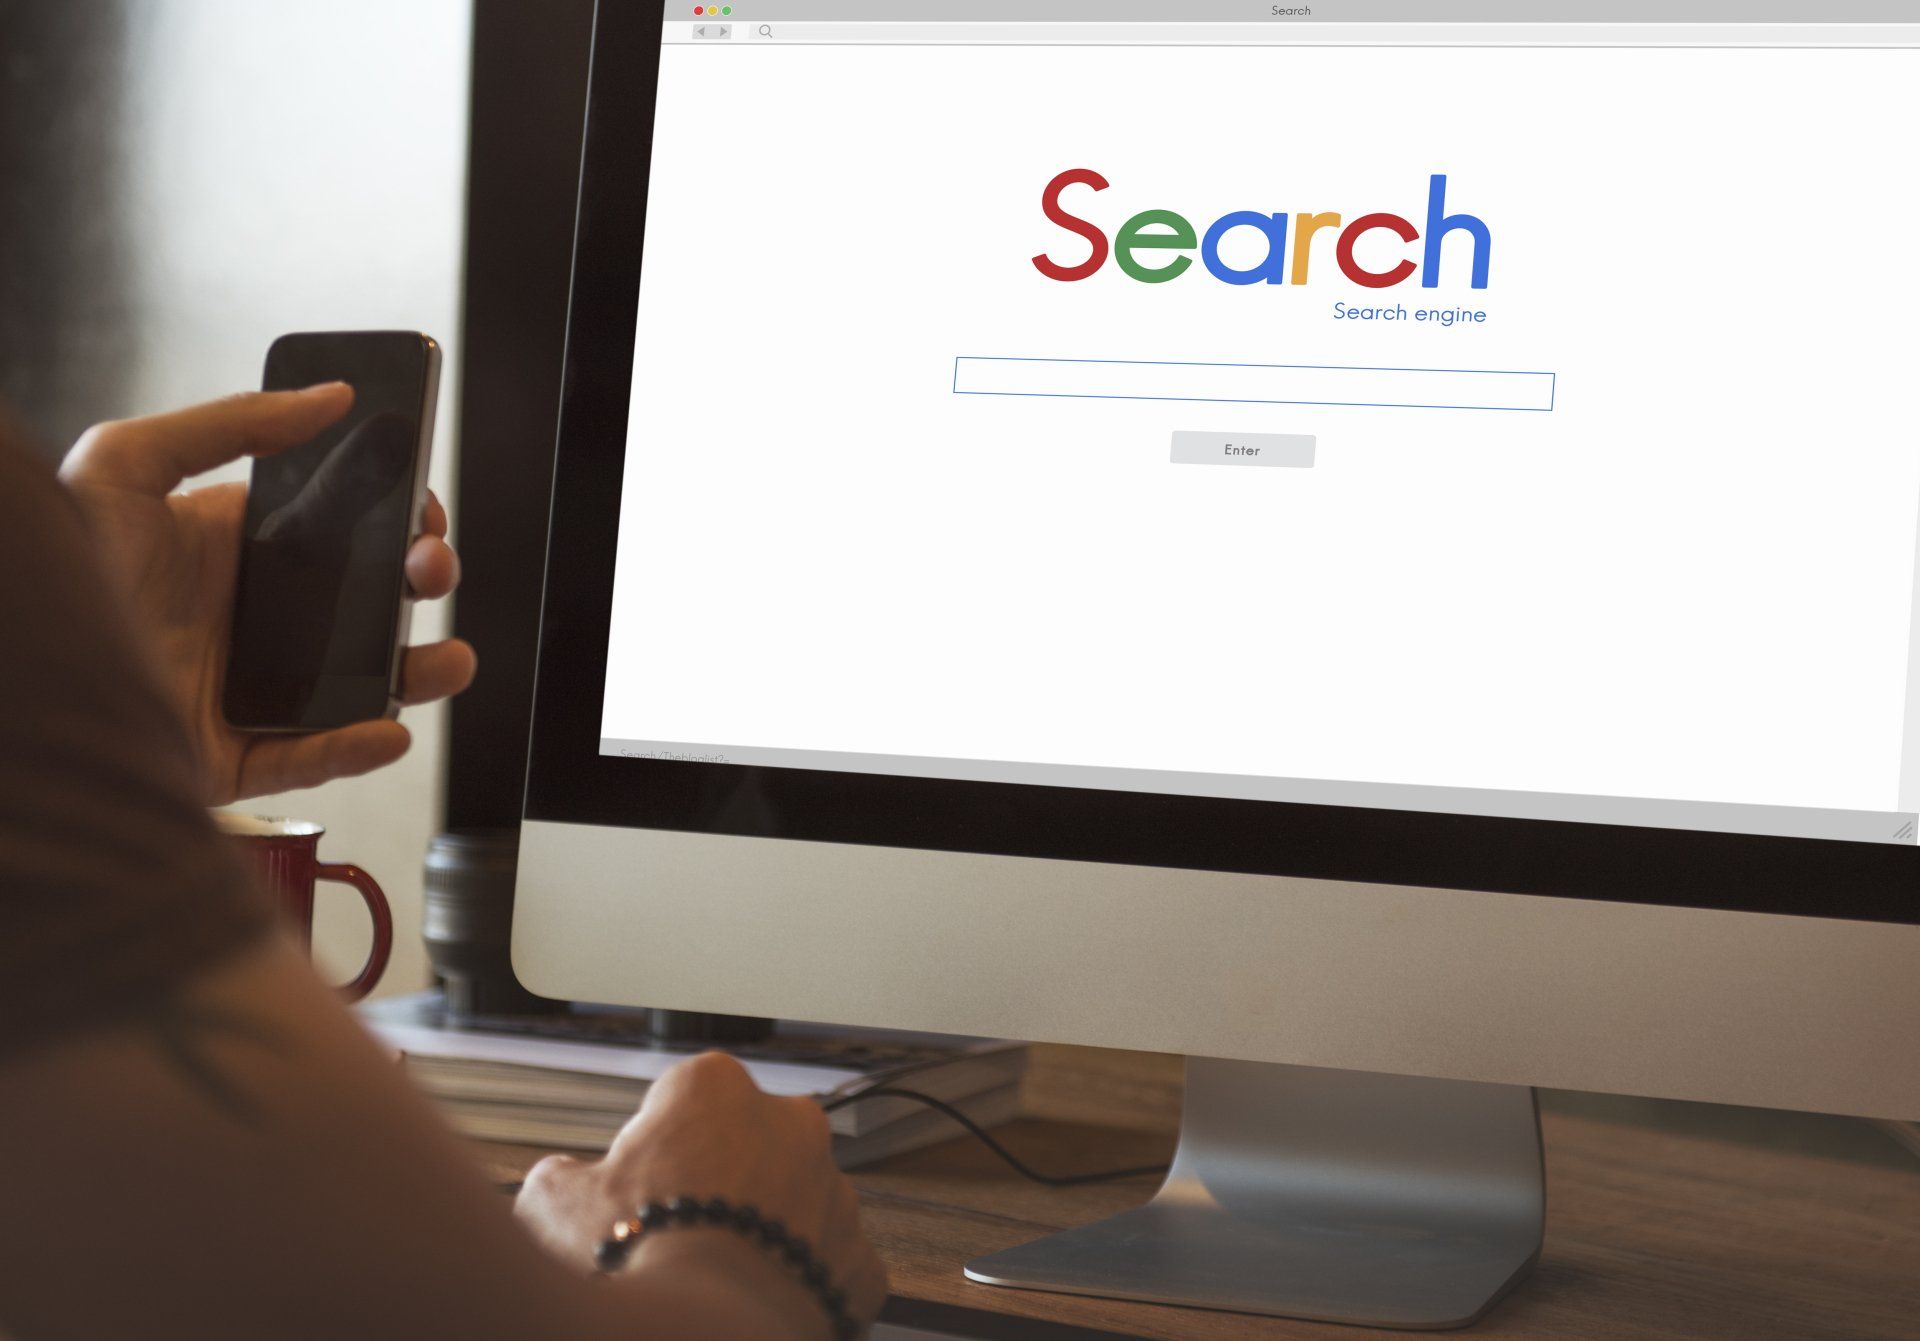 Local Search Engine Optimization: A guide